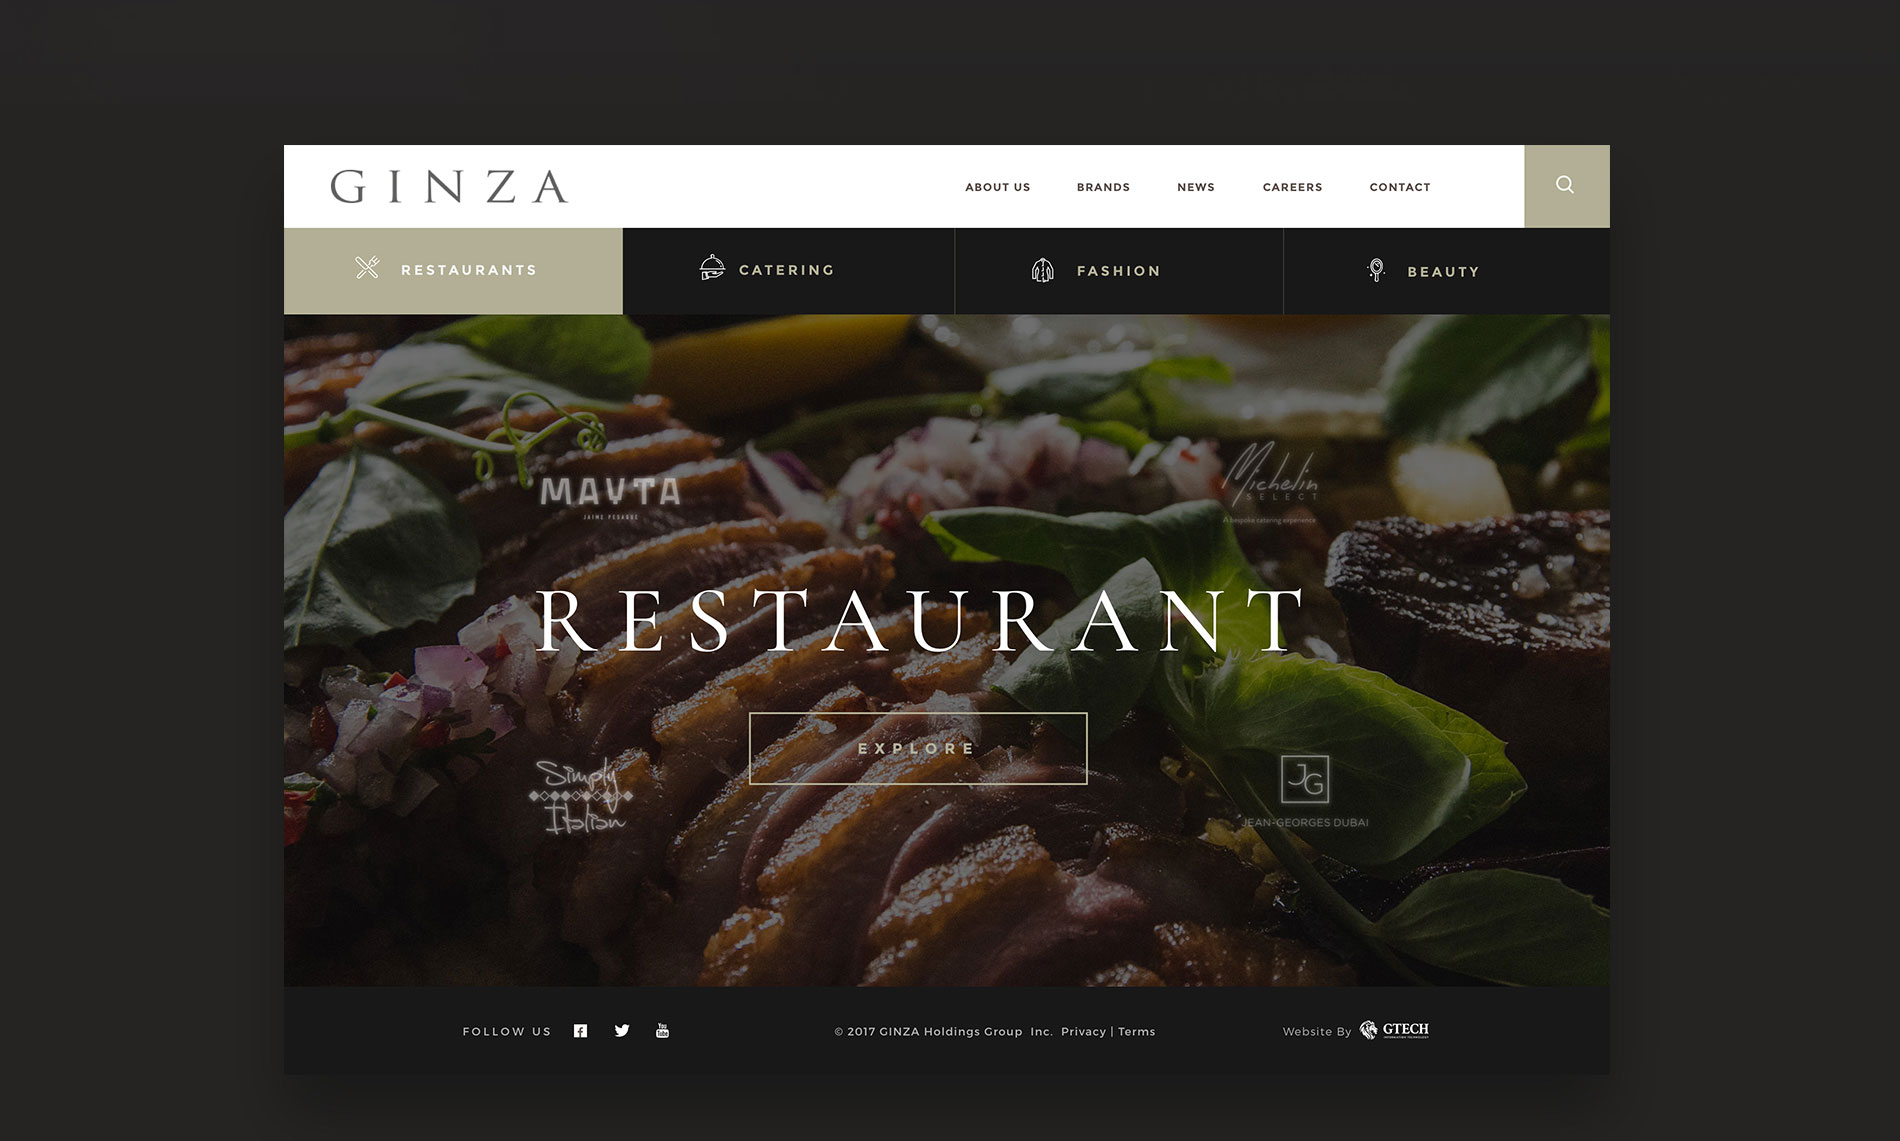 Ginza Holdings Web Design Agency Dubai GTECH